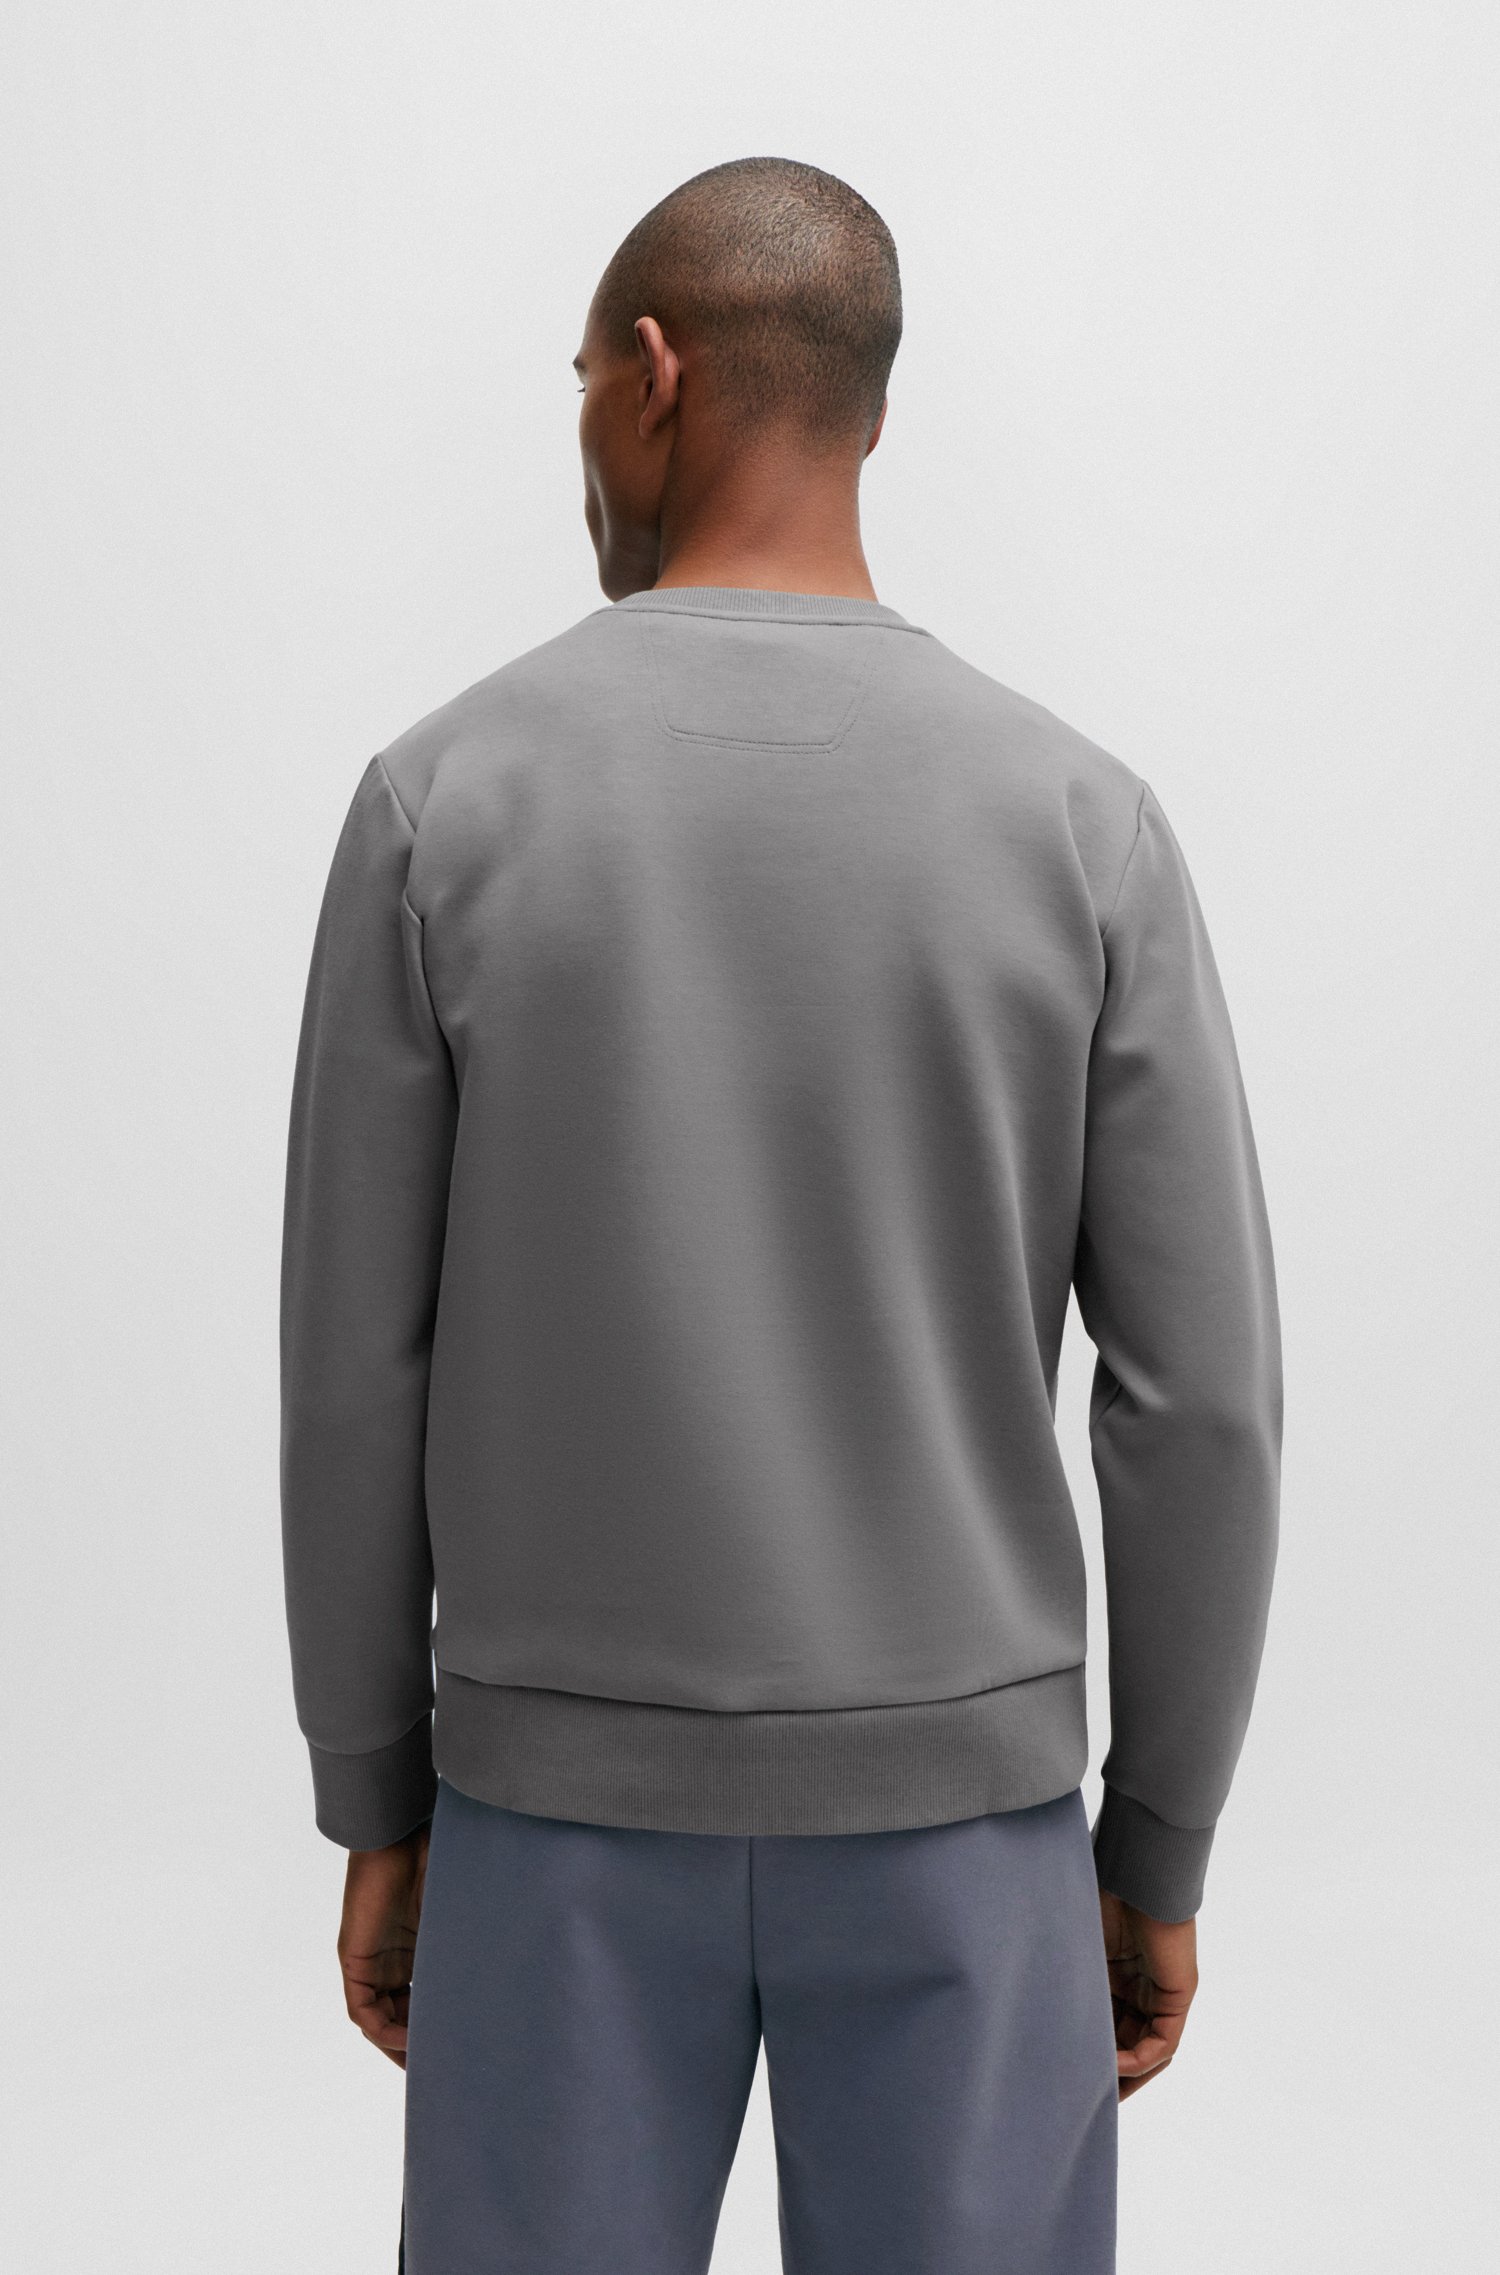 Mixed-material regular-fit sweatshirt with logo print